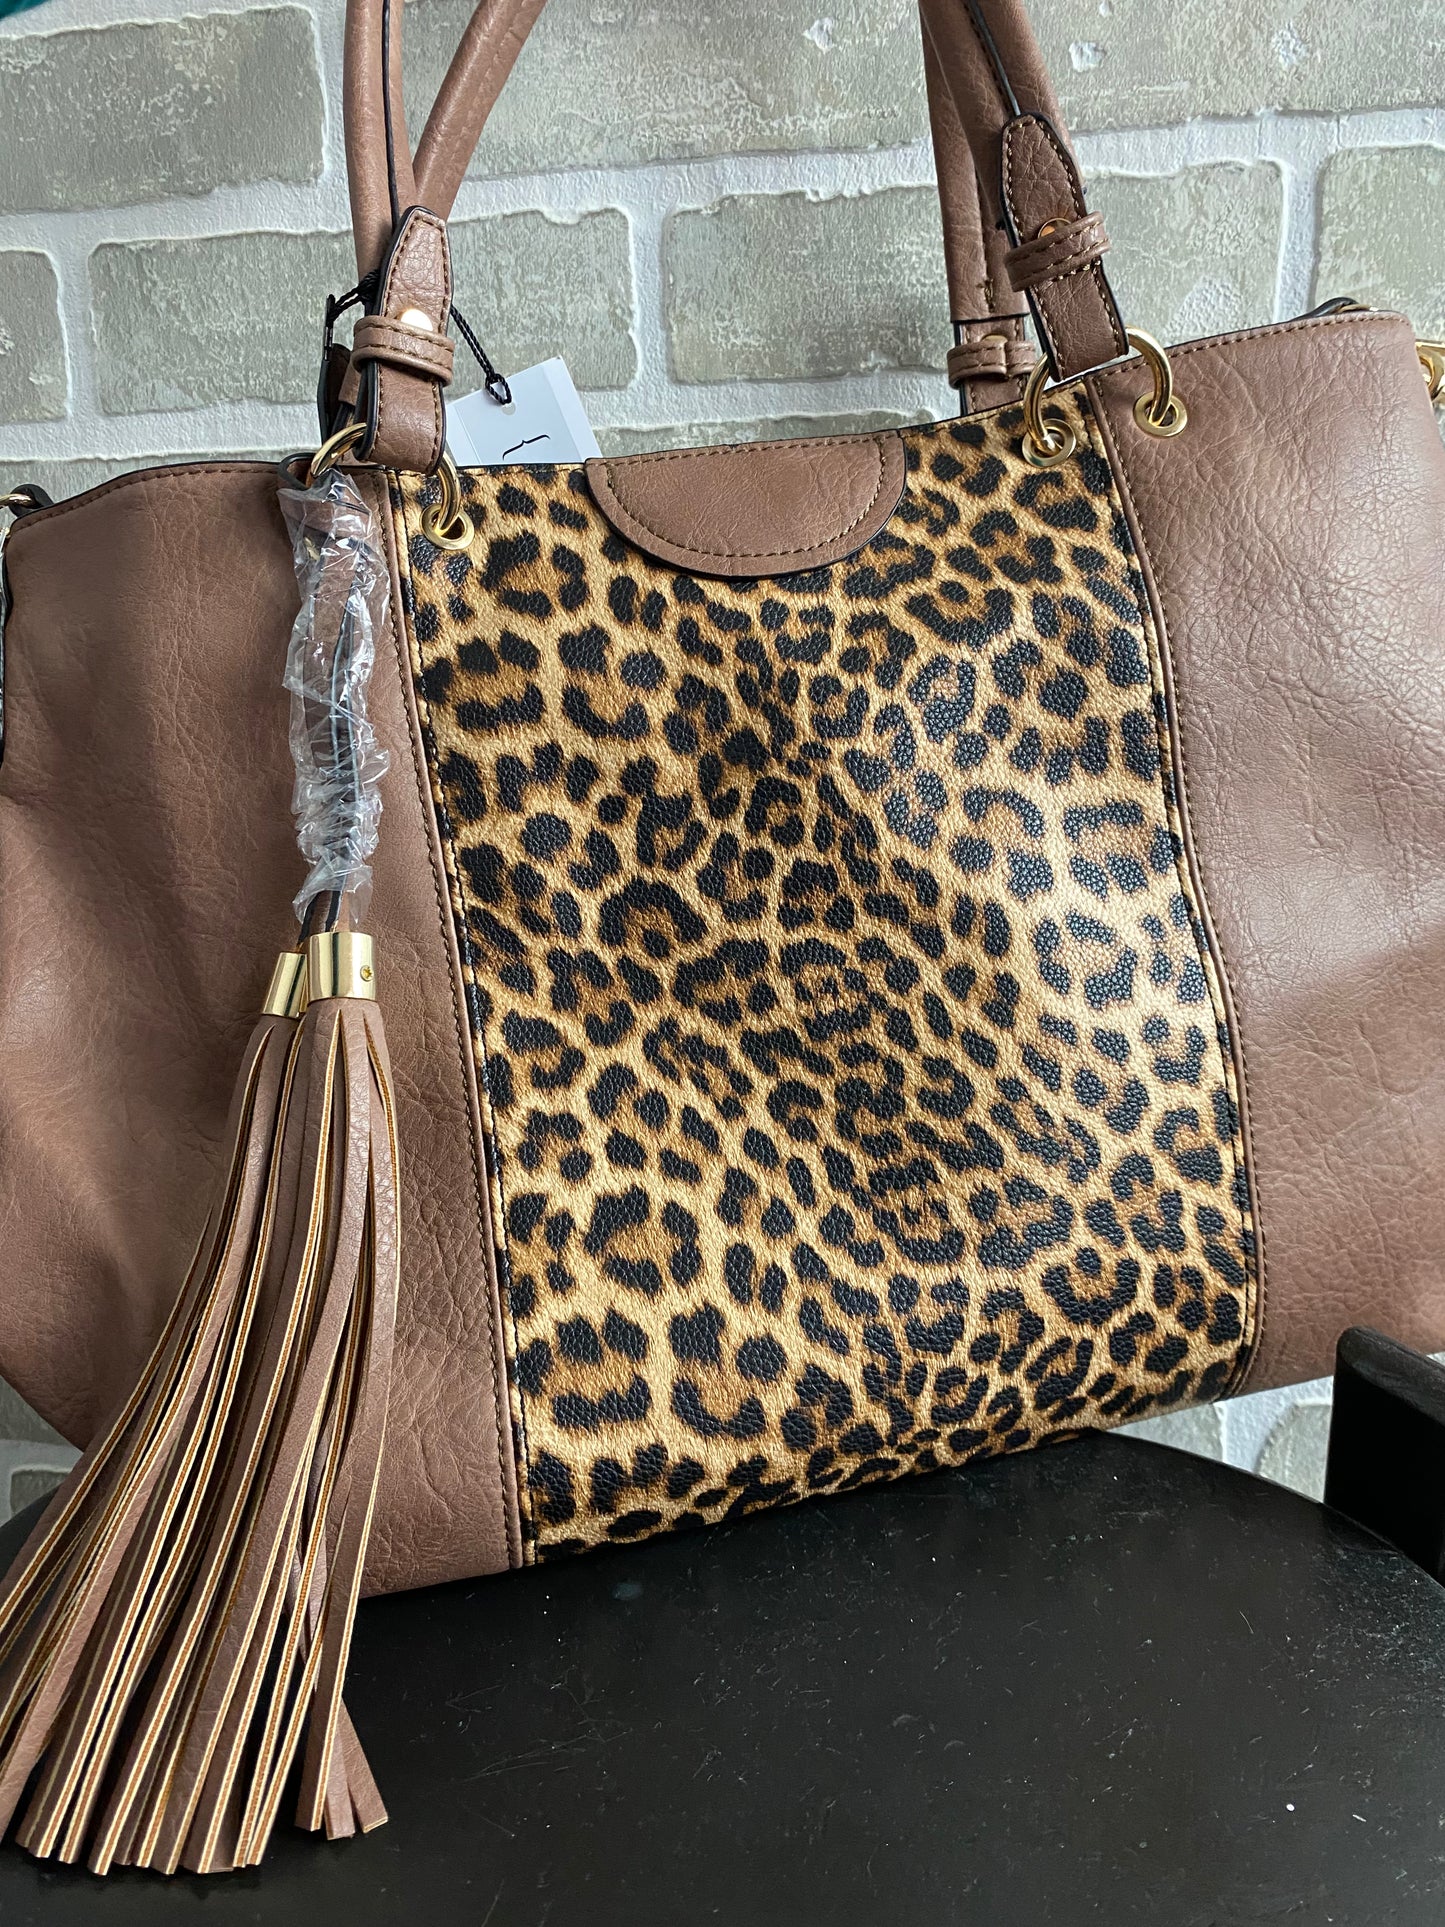 Leopard with mocha handbag